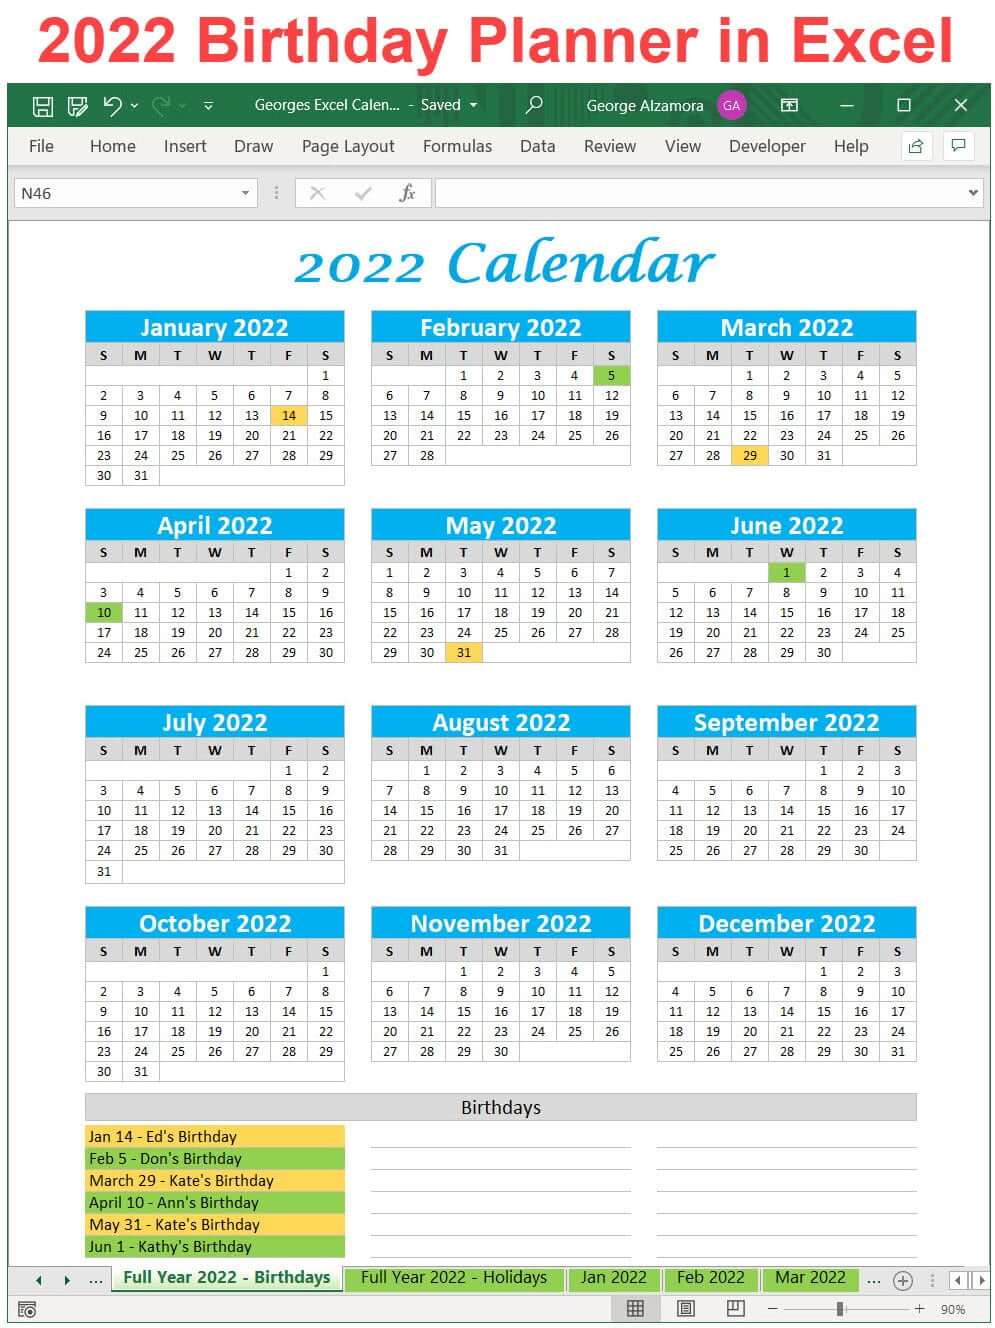 2022 calendar birthday planner Excel spreadsheet